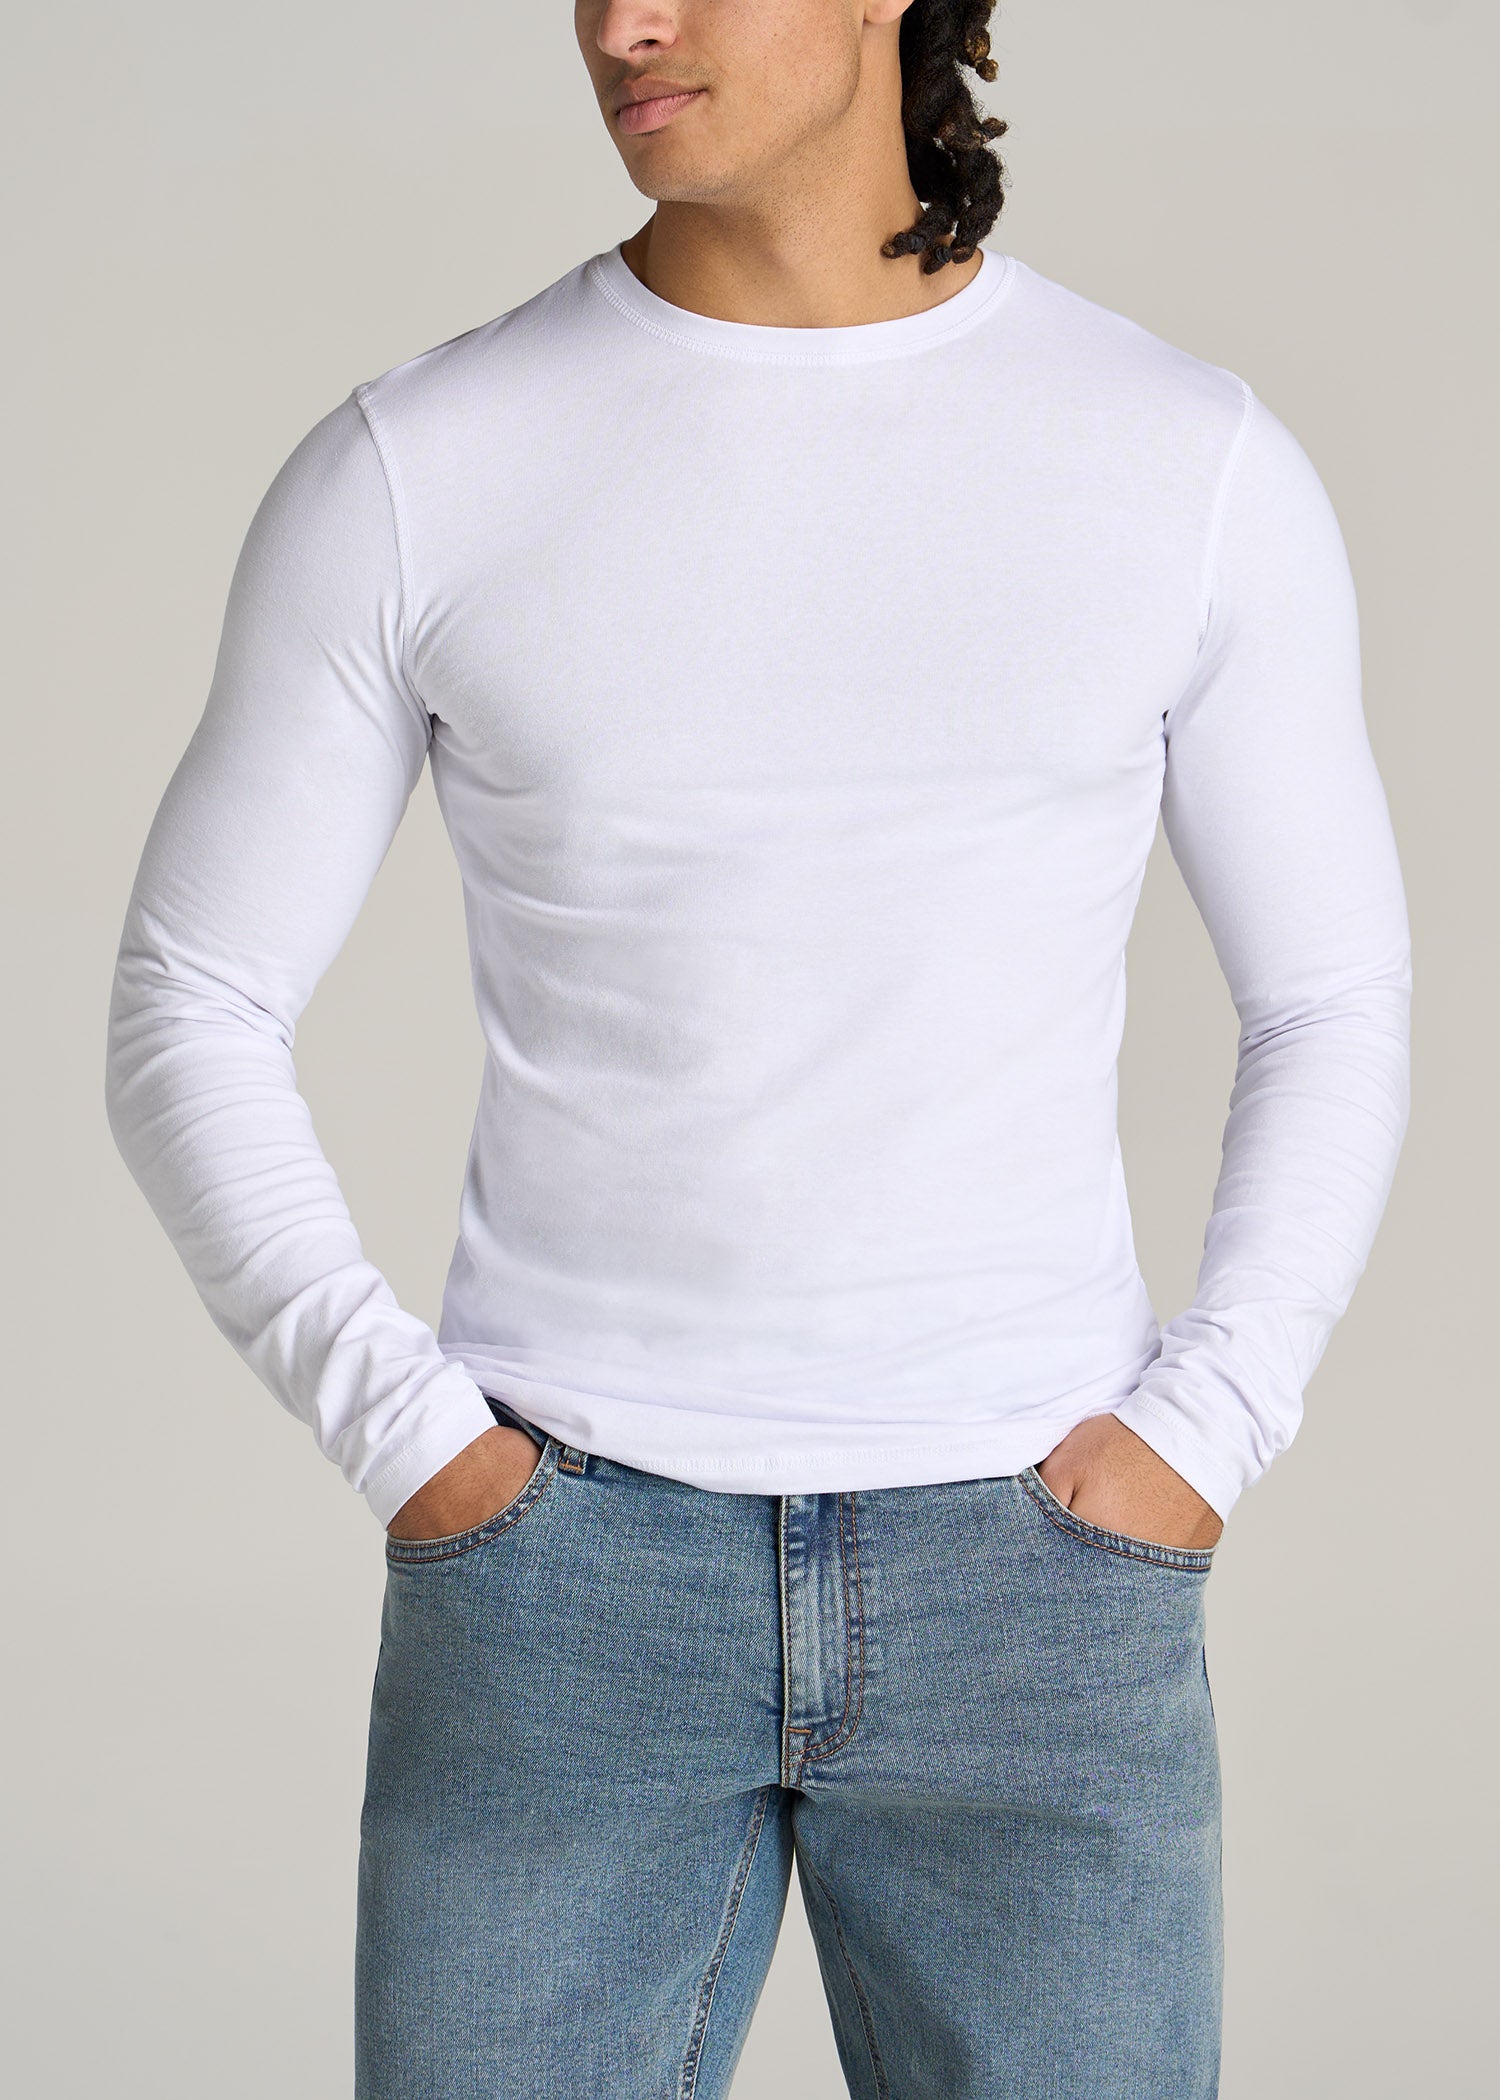 houder Nevelig Bijdrage Original Essentials Slim-Fit Tall Long Sleeve Shirt | American Tall